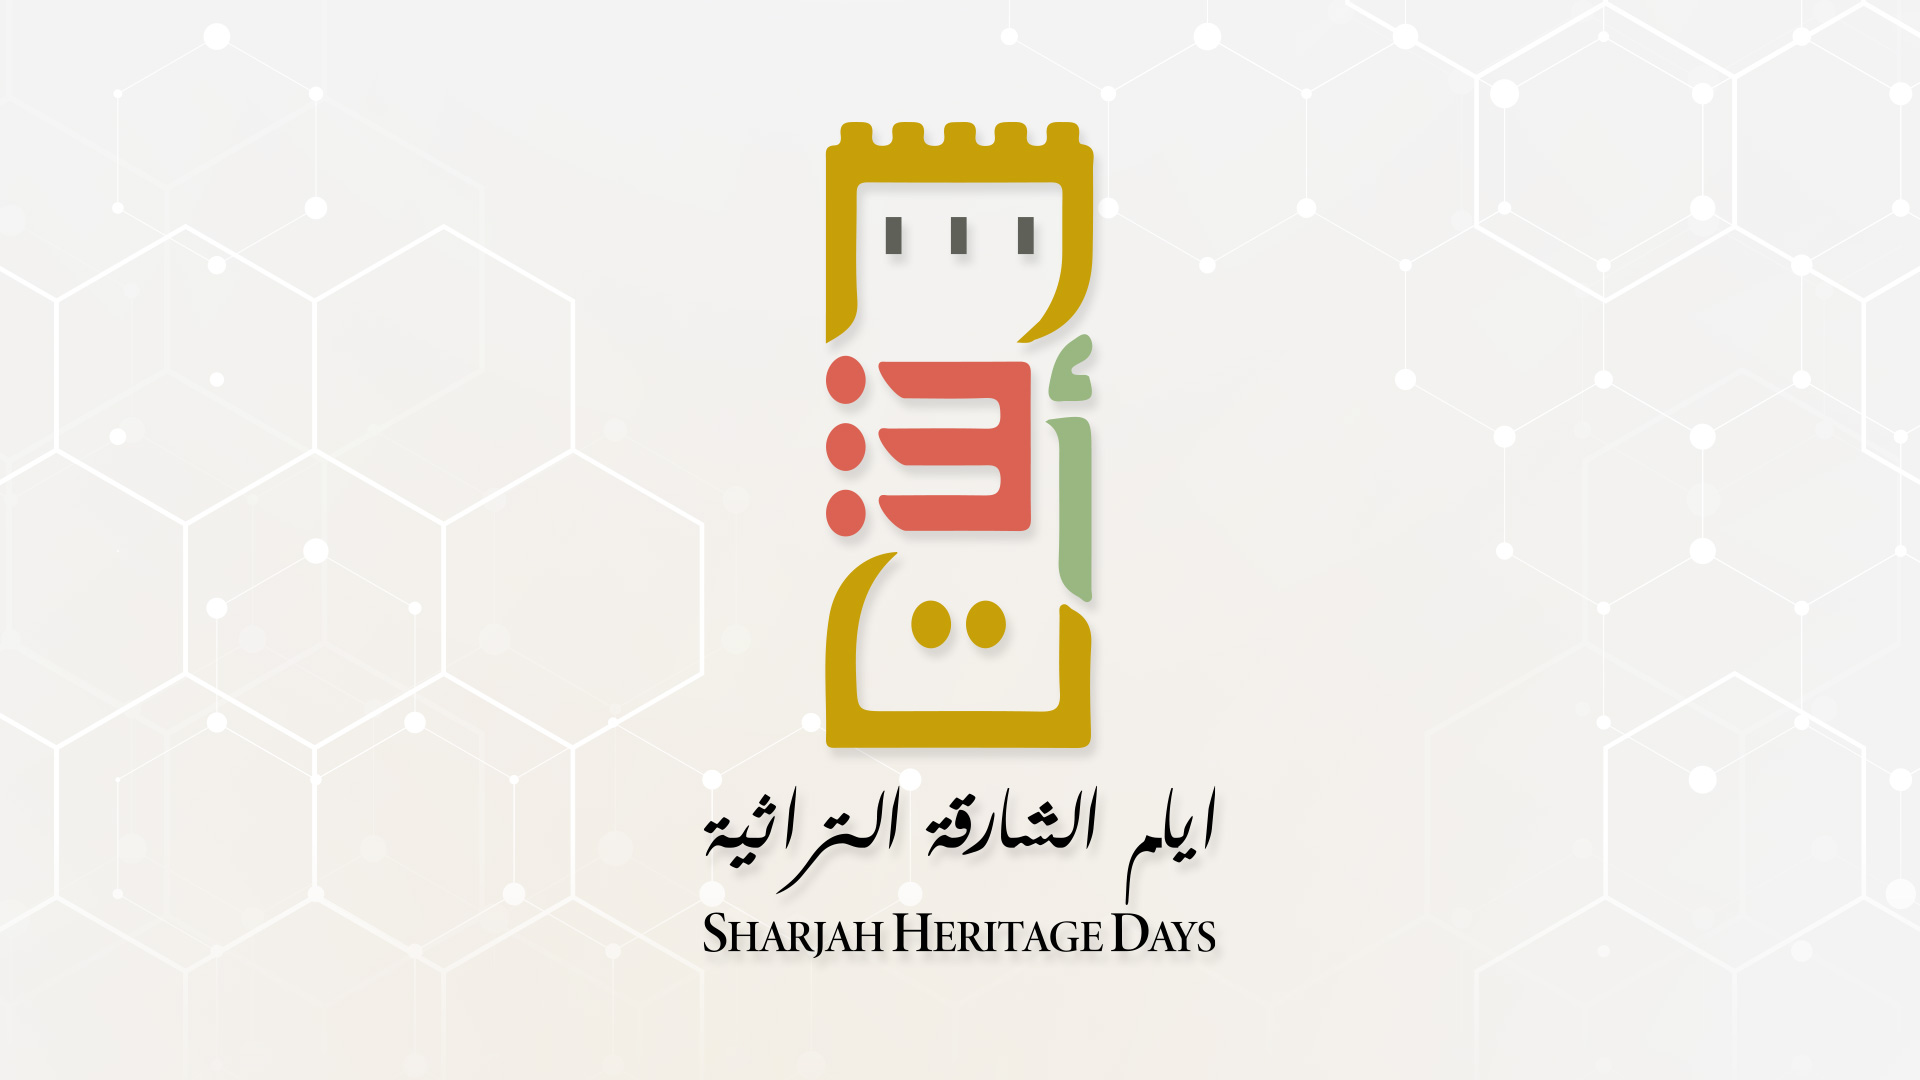 Sharjah Heritage Days